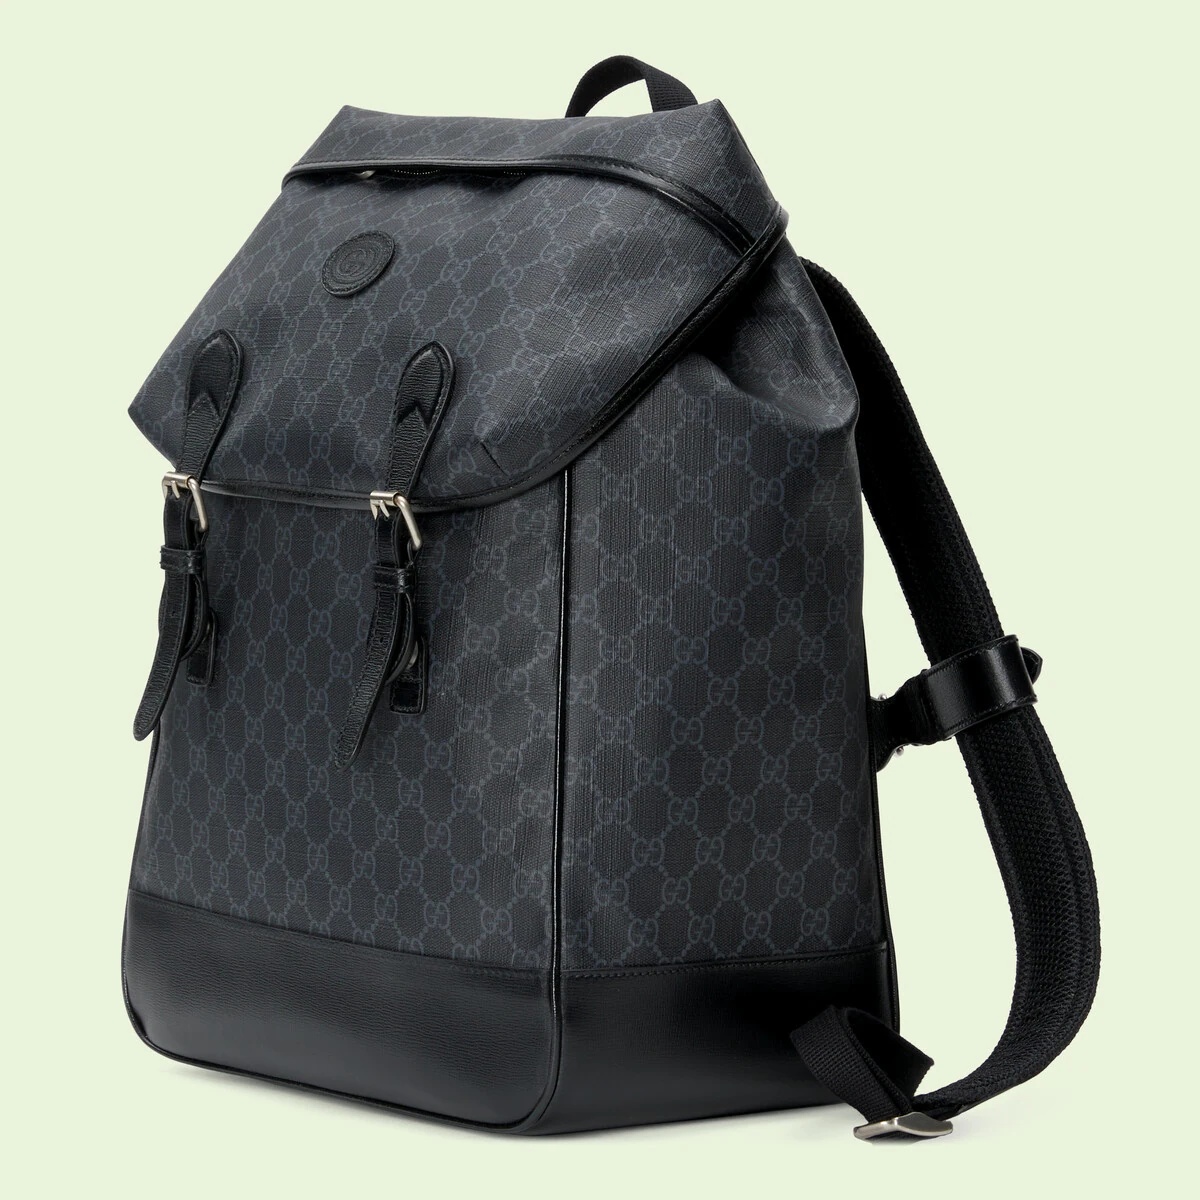 Medium backpack with Interlocking G - 2